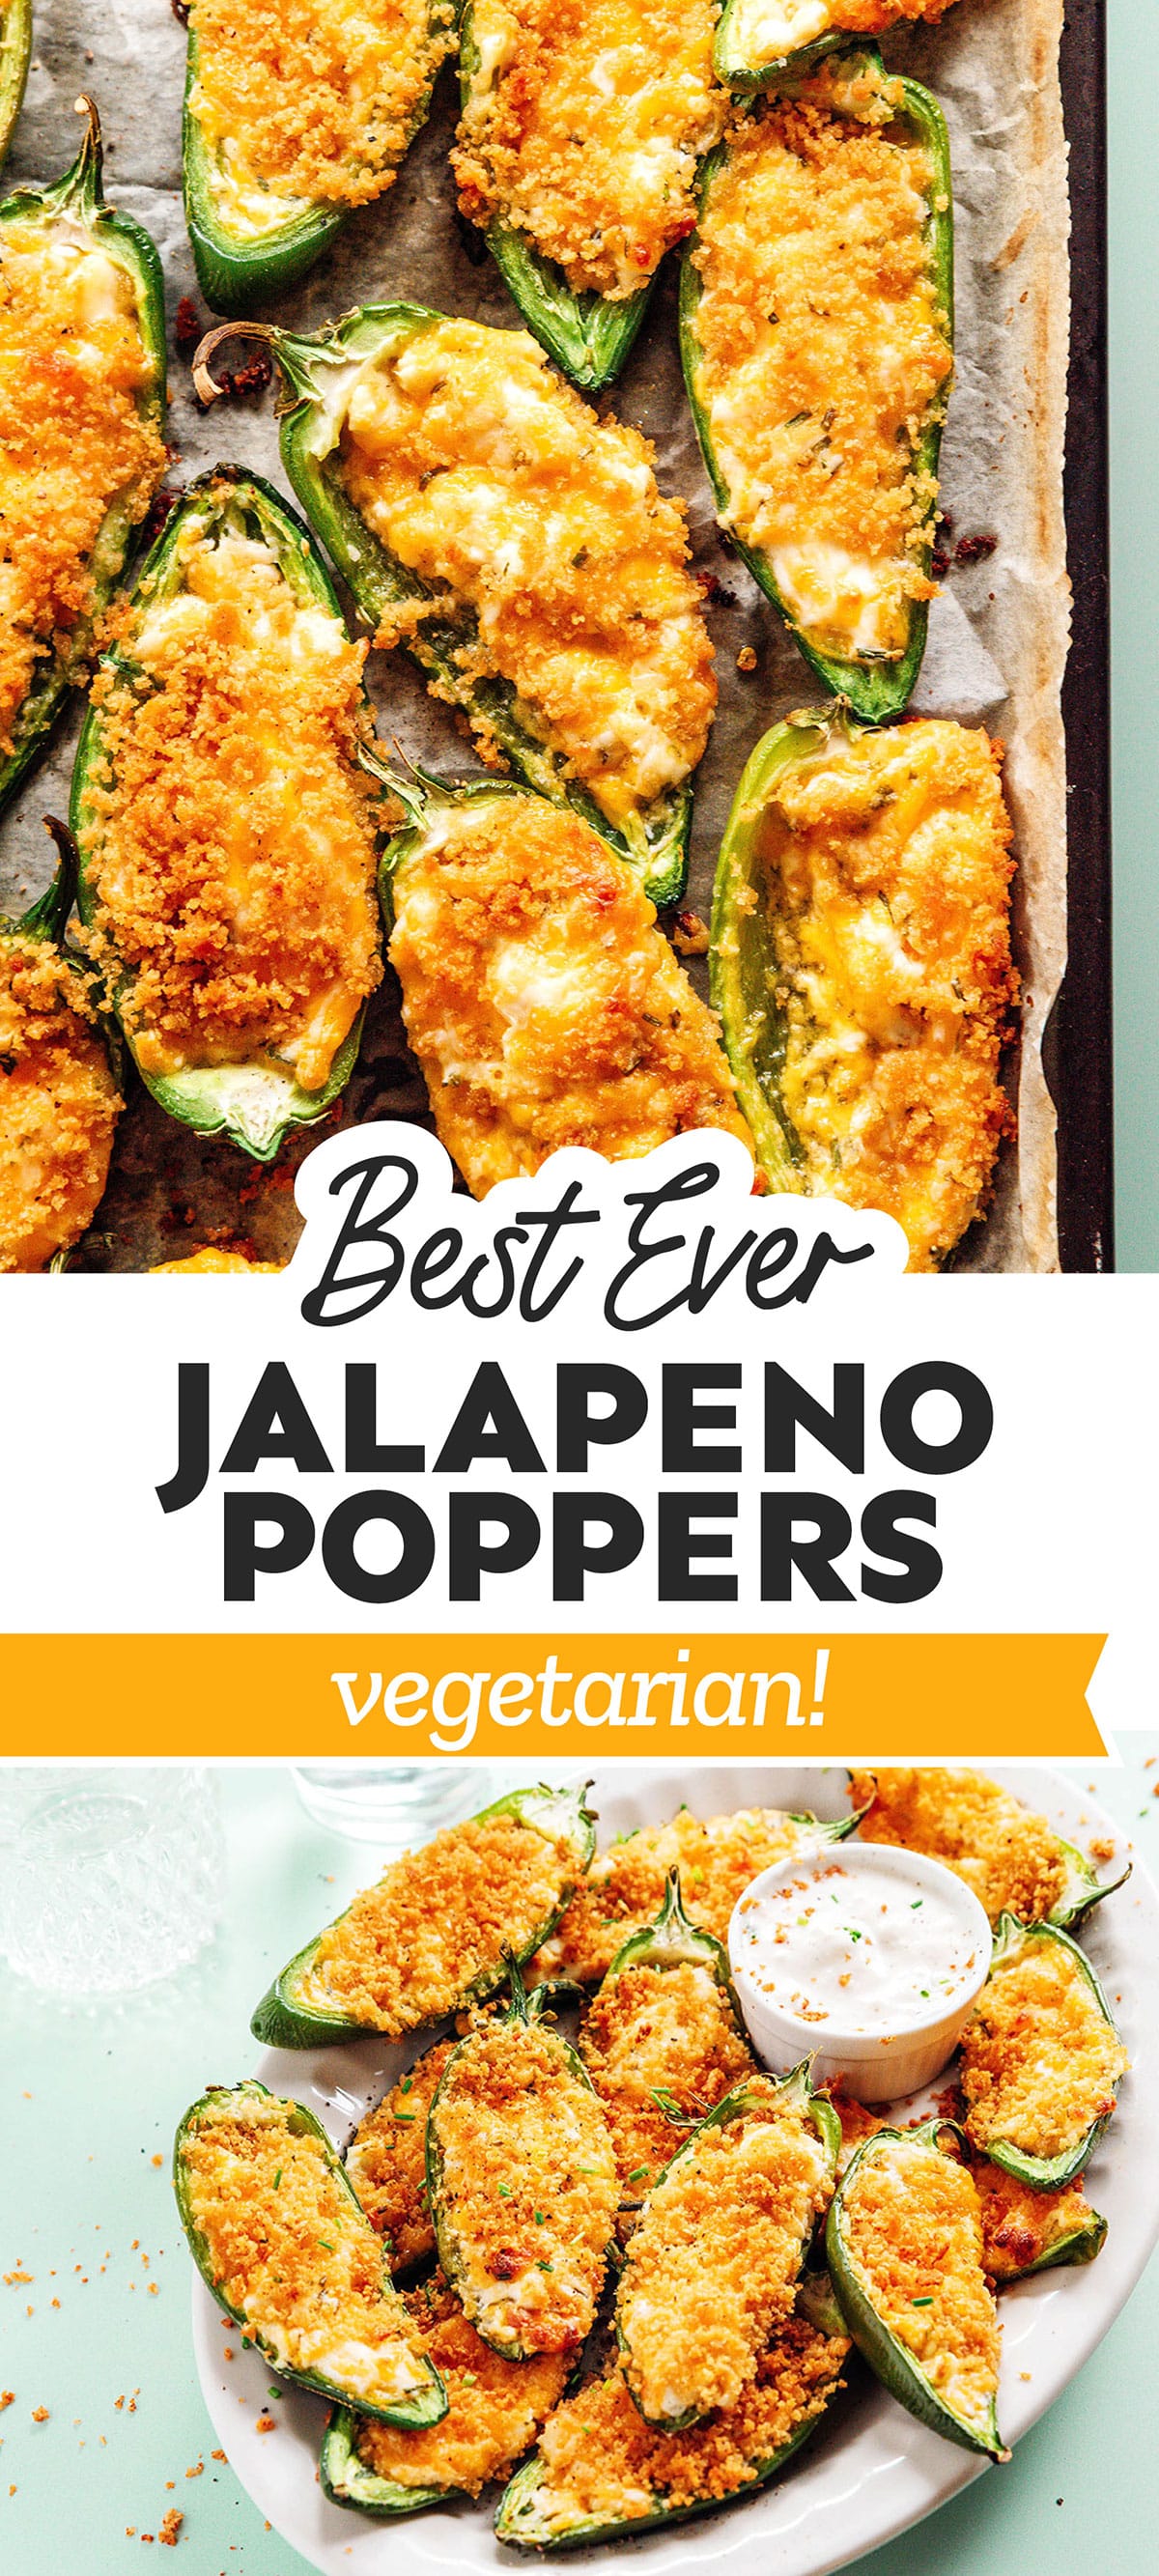 Baked Vegetarian Jalapeño Poppers | Live Eat Learn